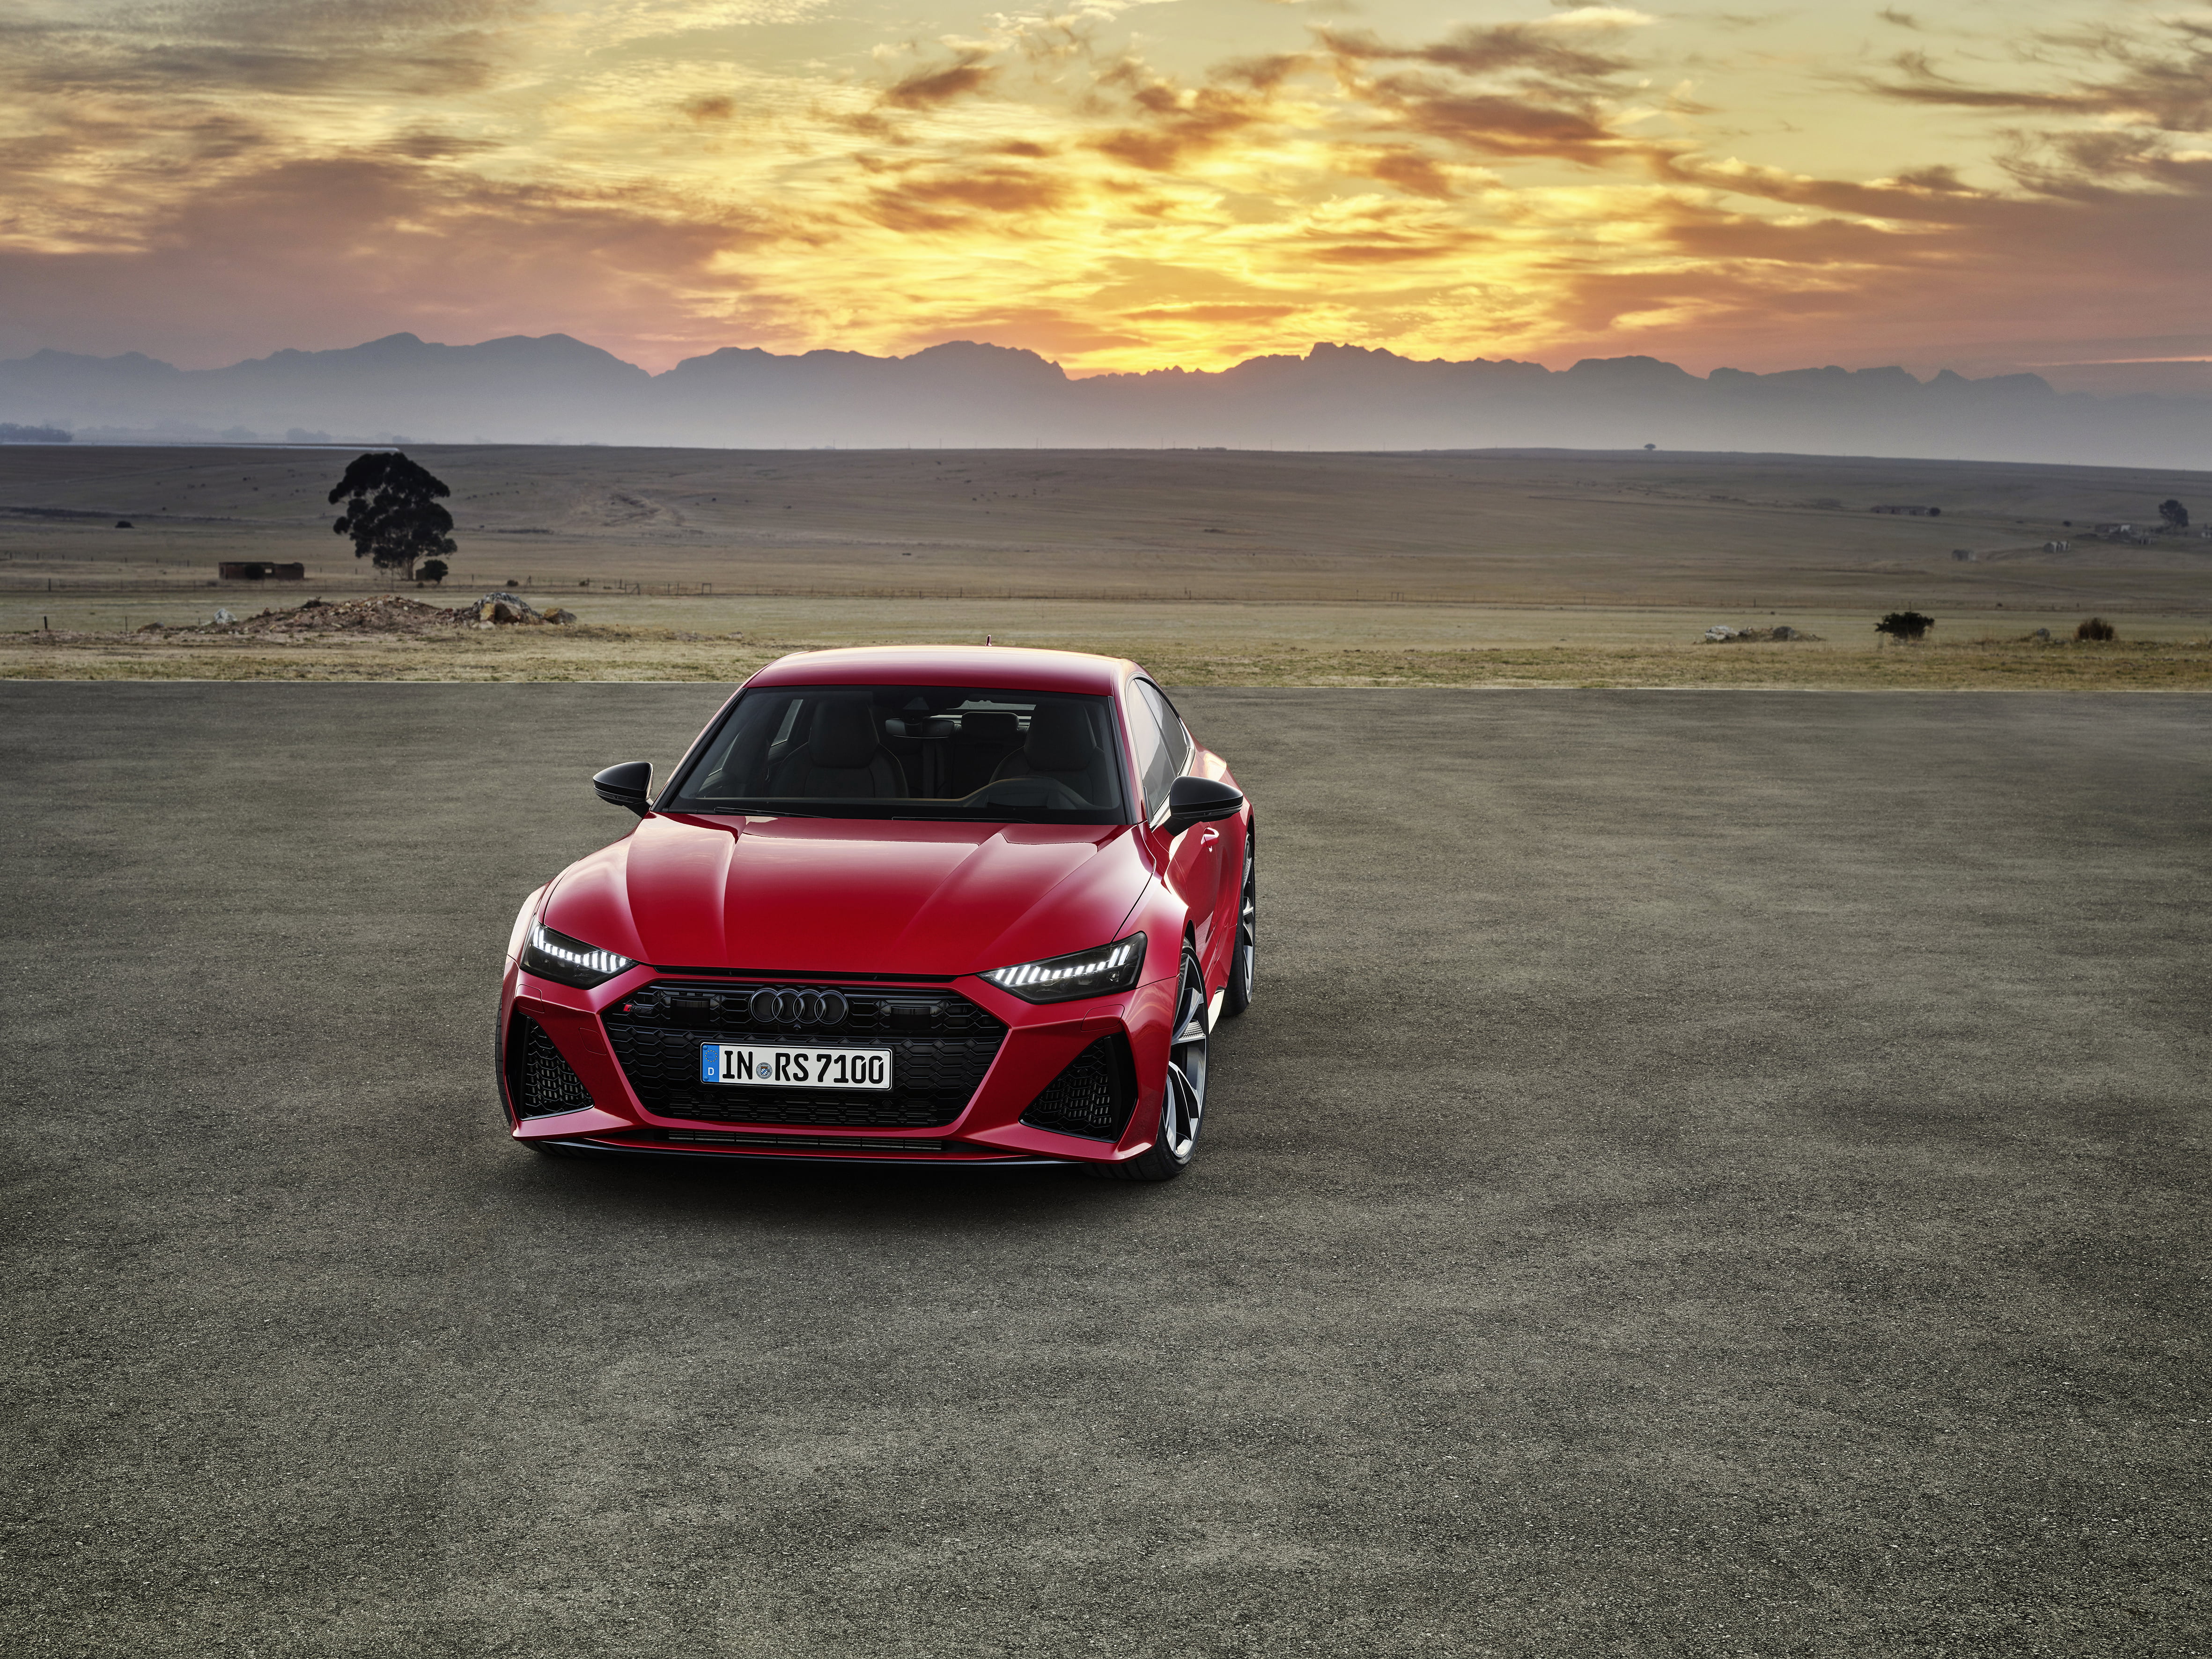 Audi, Audi RS7, Car, Luxury Car, Red Car, Vehicle